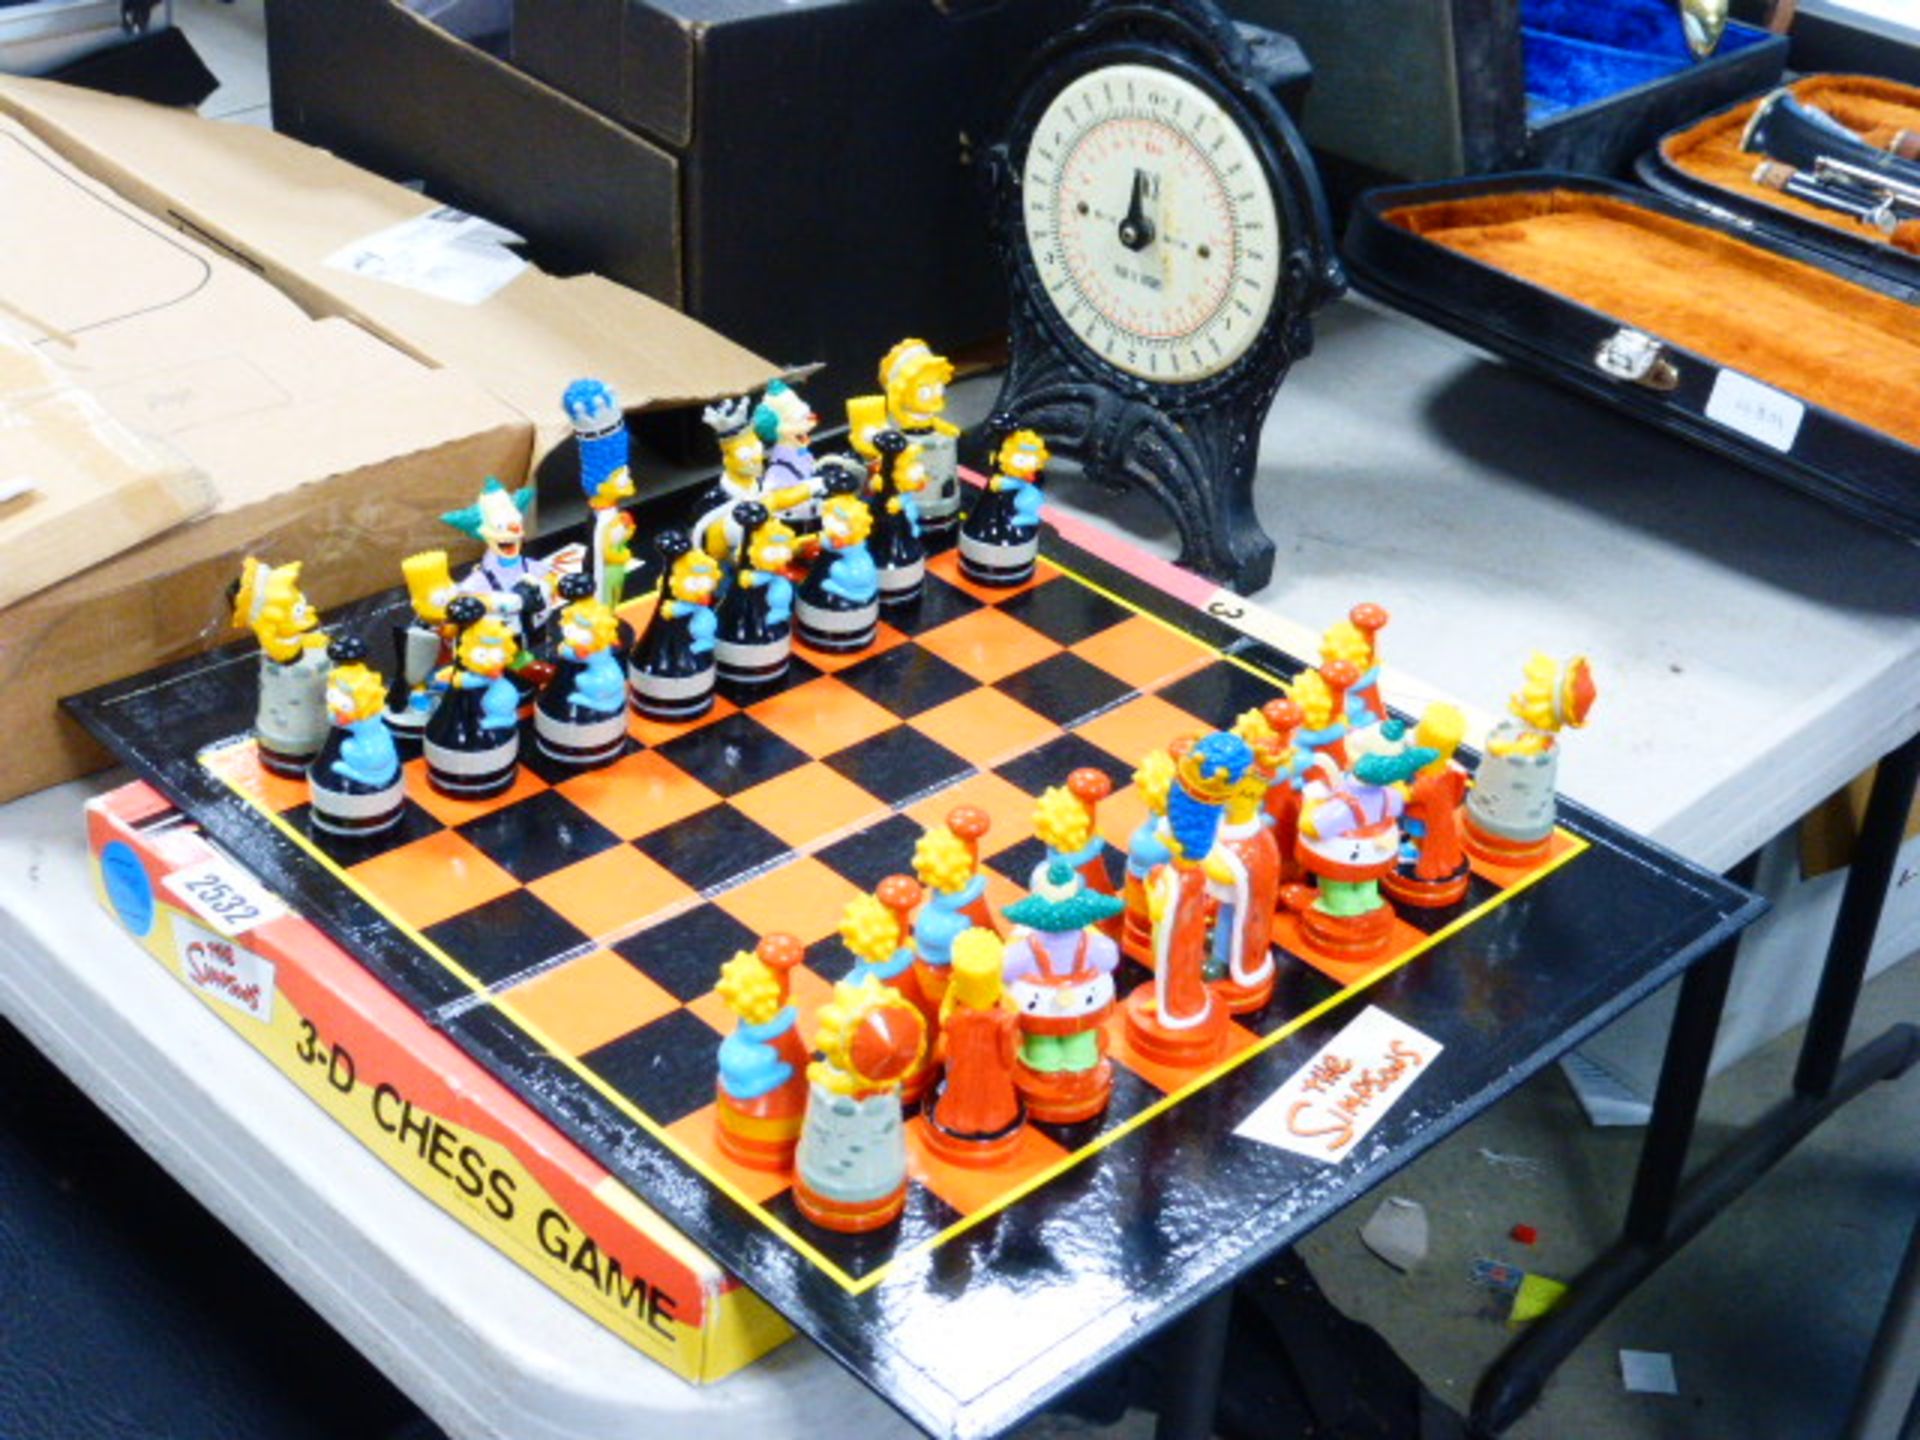 Simpson's novelty chess set